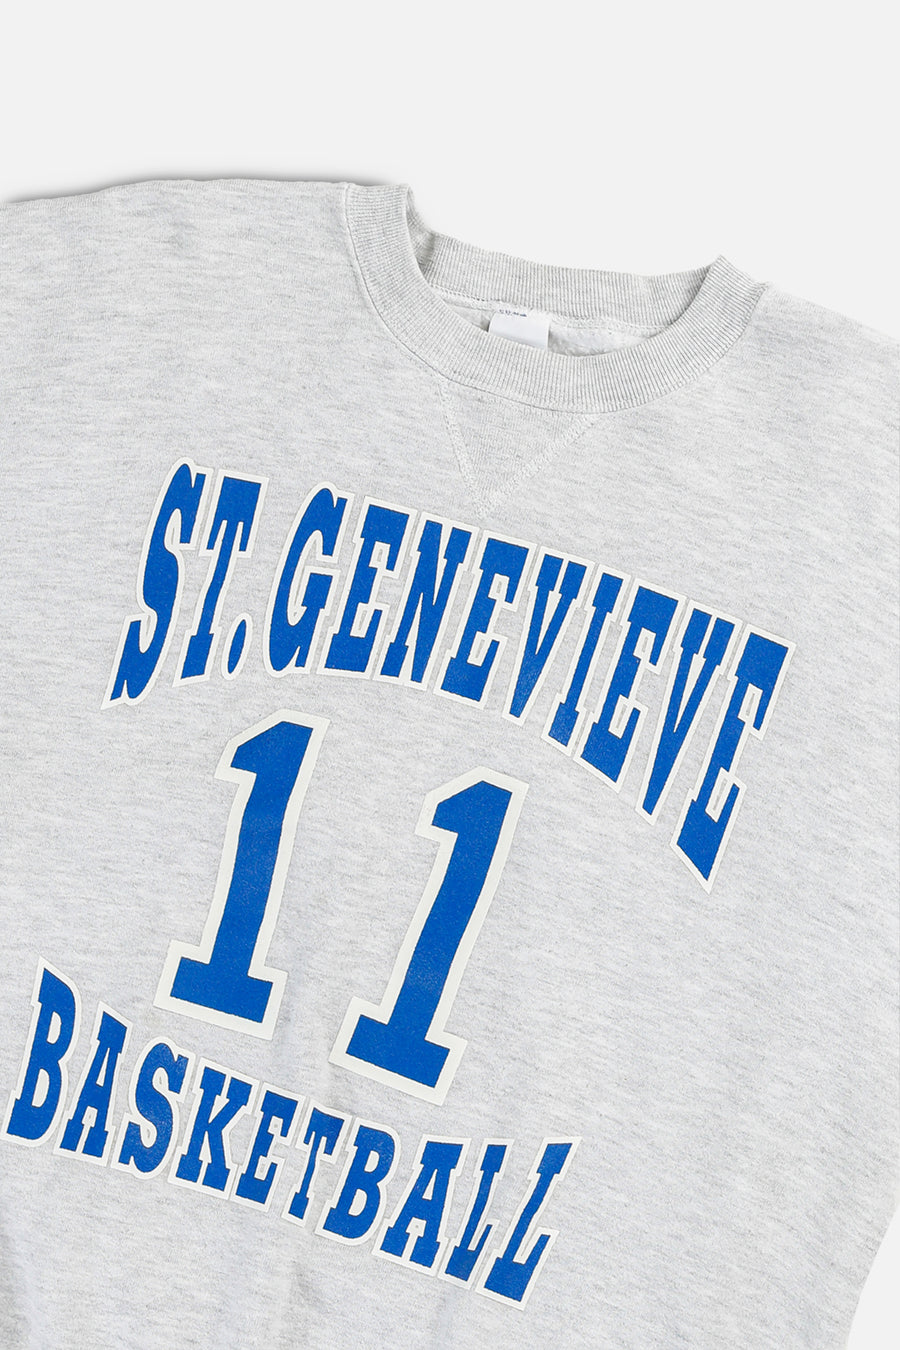 Vintage St. Genevieve Basketball Sweatshirt - L